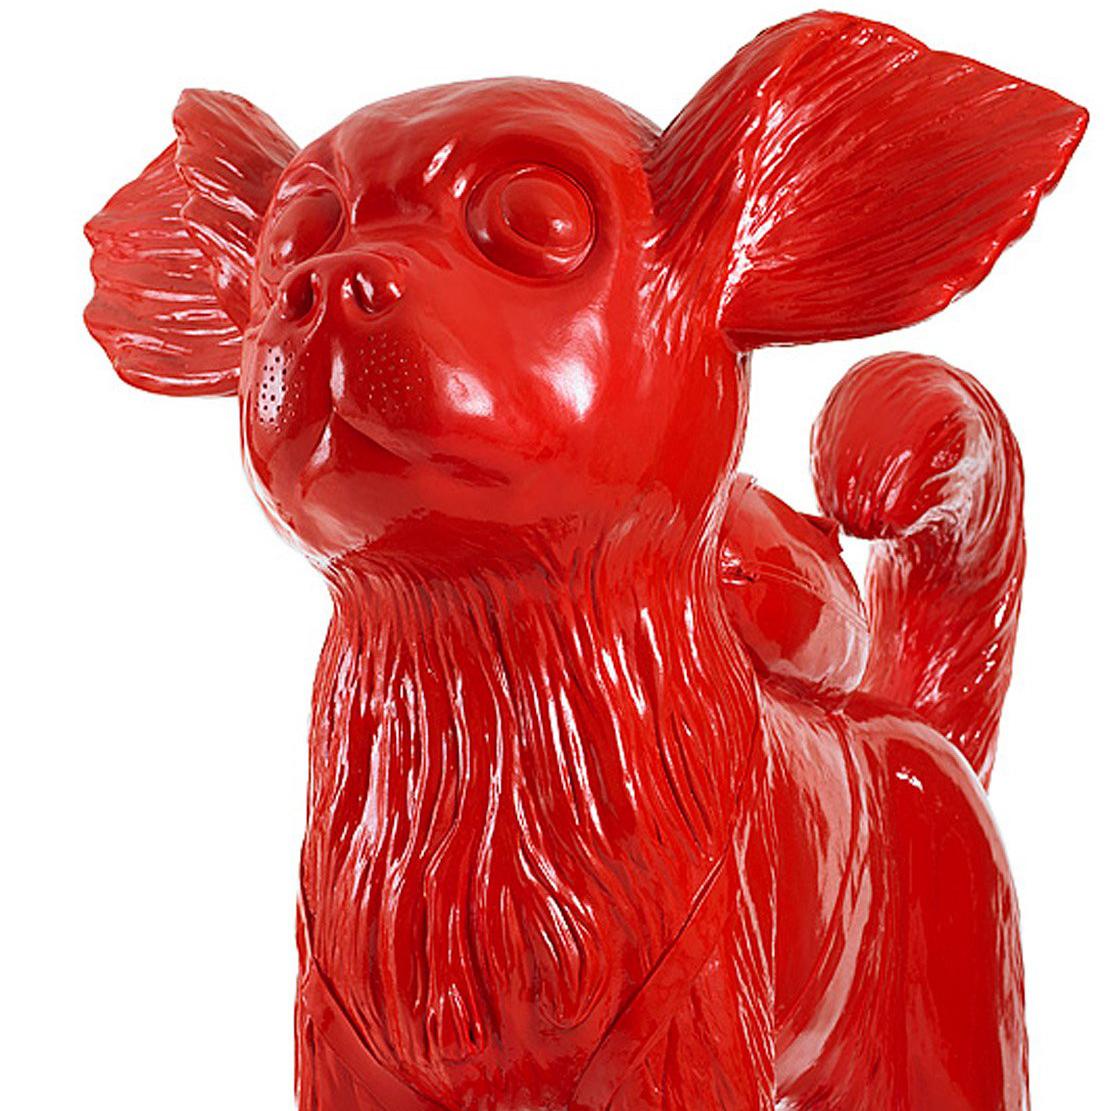 Chihuahua clonado  - Figurative Sculpture Rojo de William Sweetlove